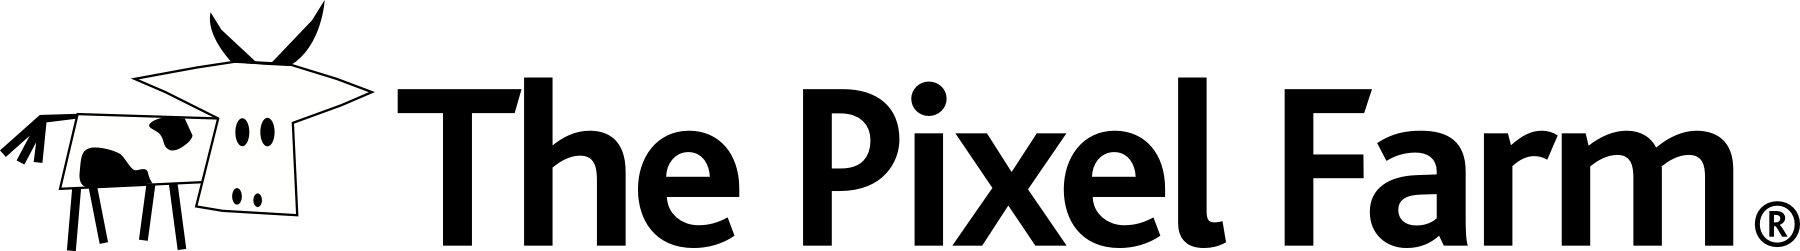 The Pixel Farm company logo